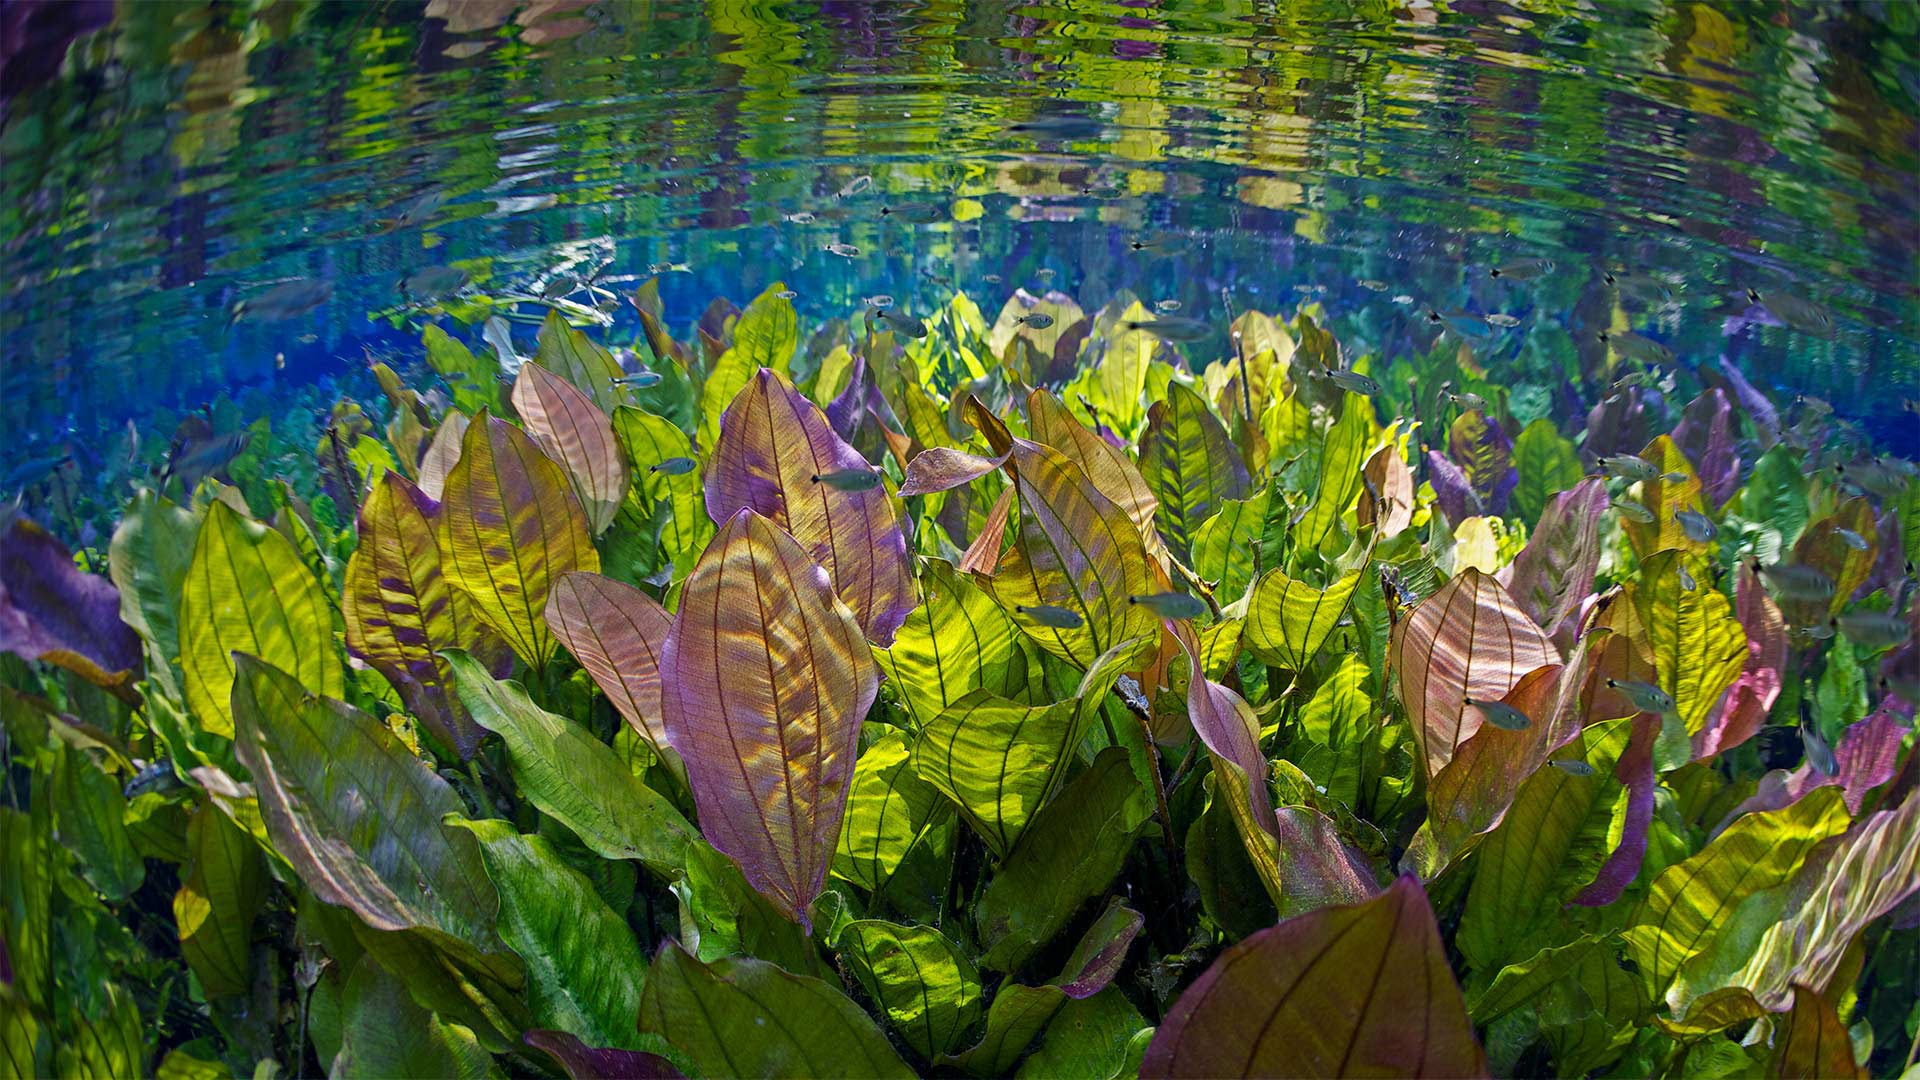 Freshwater plants and tetra fish, Aquário Natural, Rio Baía Bonita, Mato Grosso do Sul, Brazil - Michel Roggo